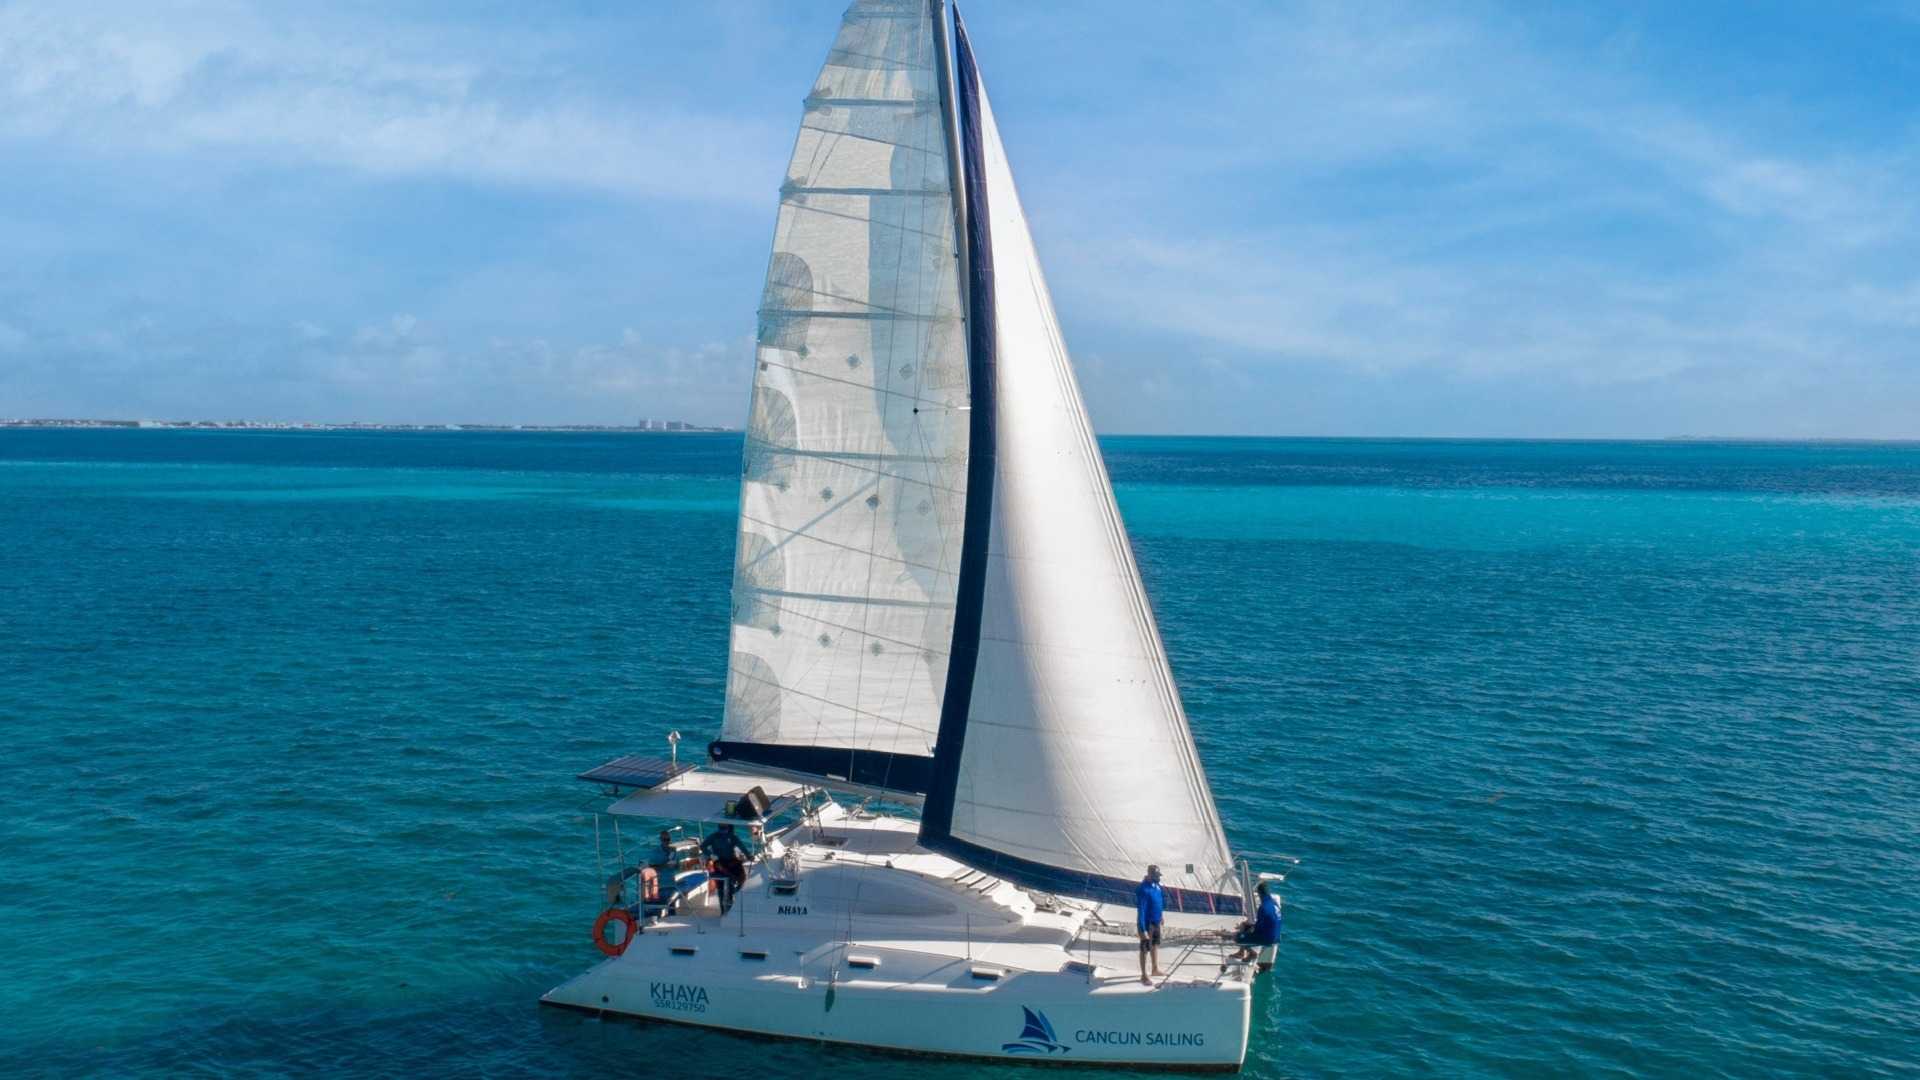 01 - LORES - Khaya catamaran - Cancun Sailing